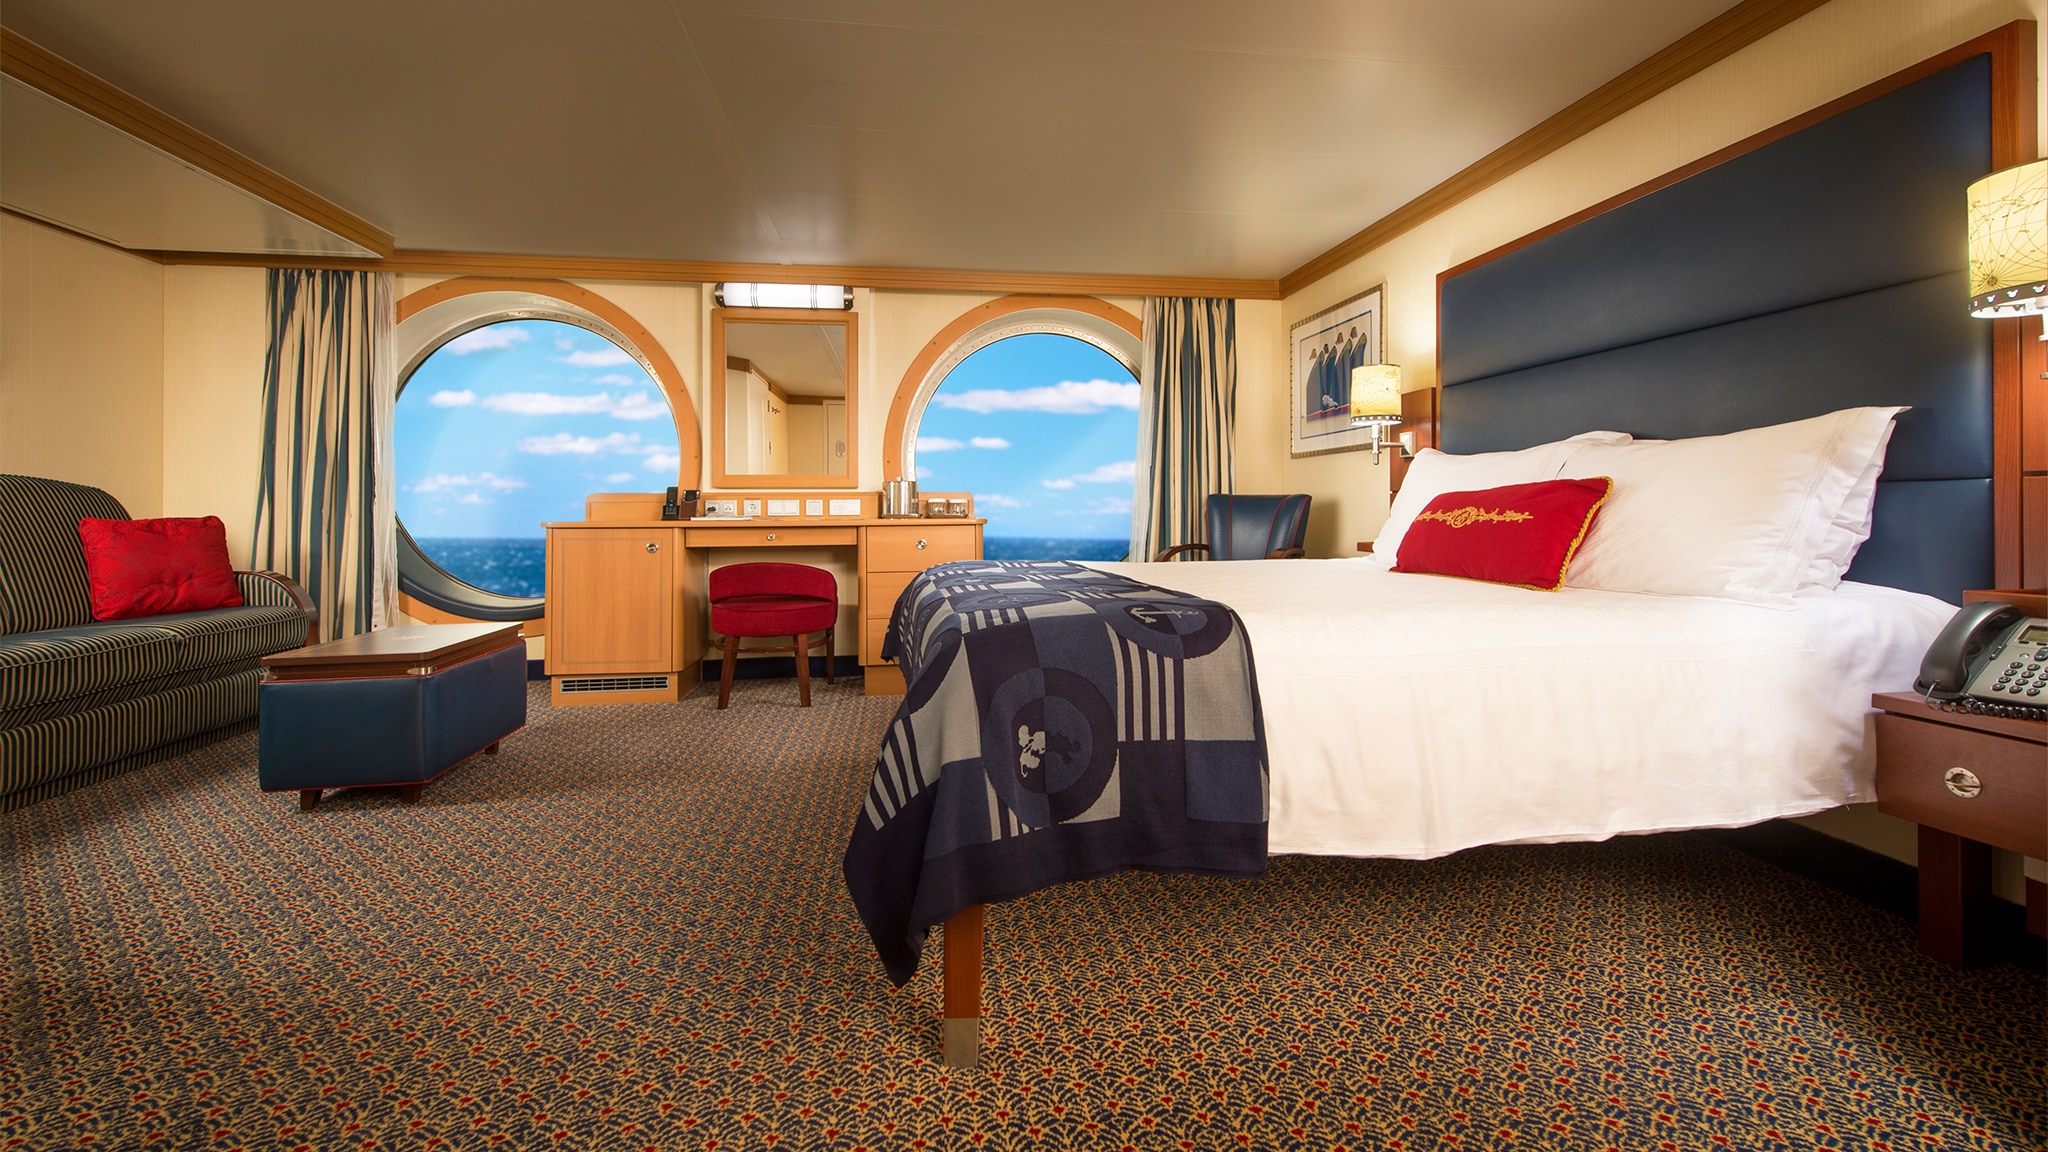 disney cruise room for 6